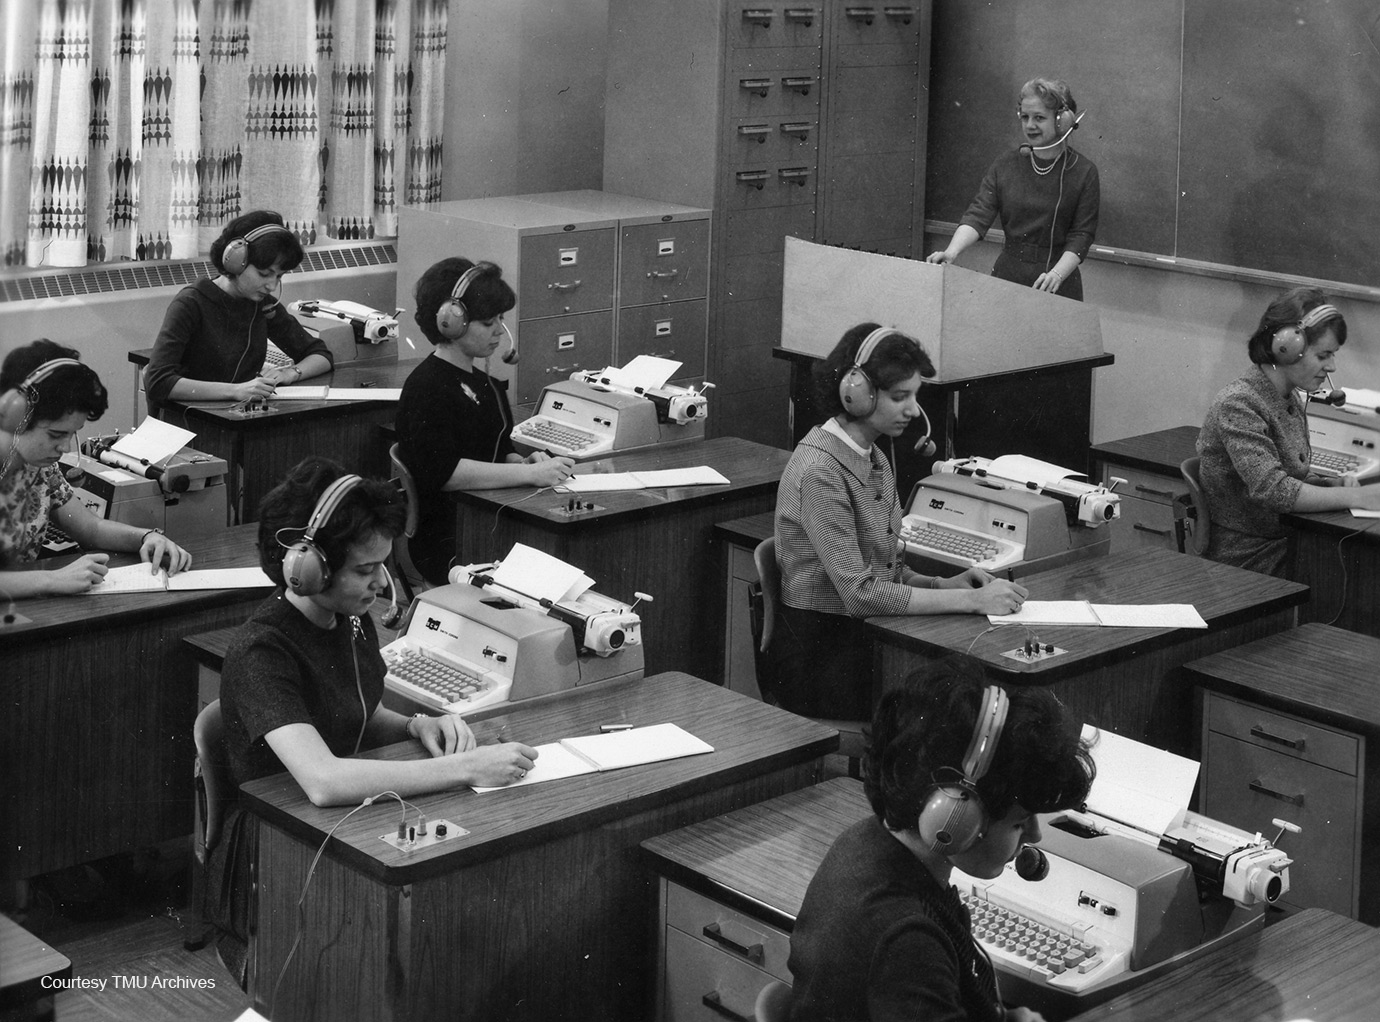 Women wearing headphones sitting at desks with typewriters.